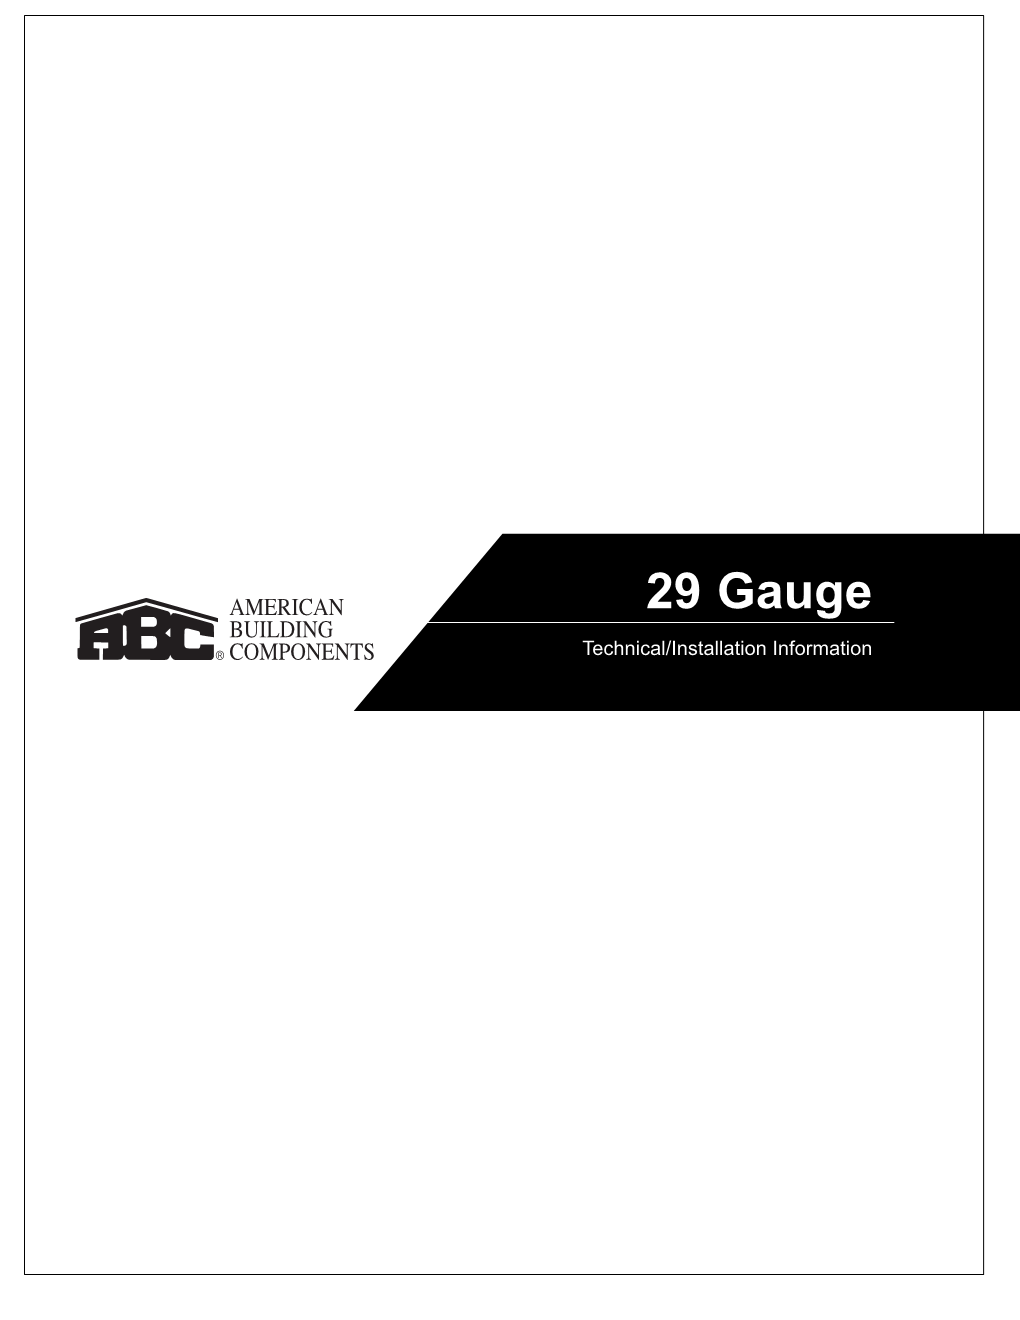 29 Gauge Manual